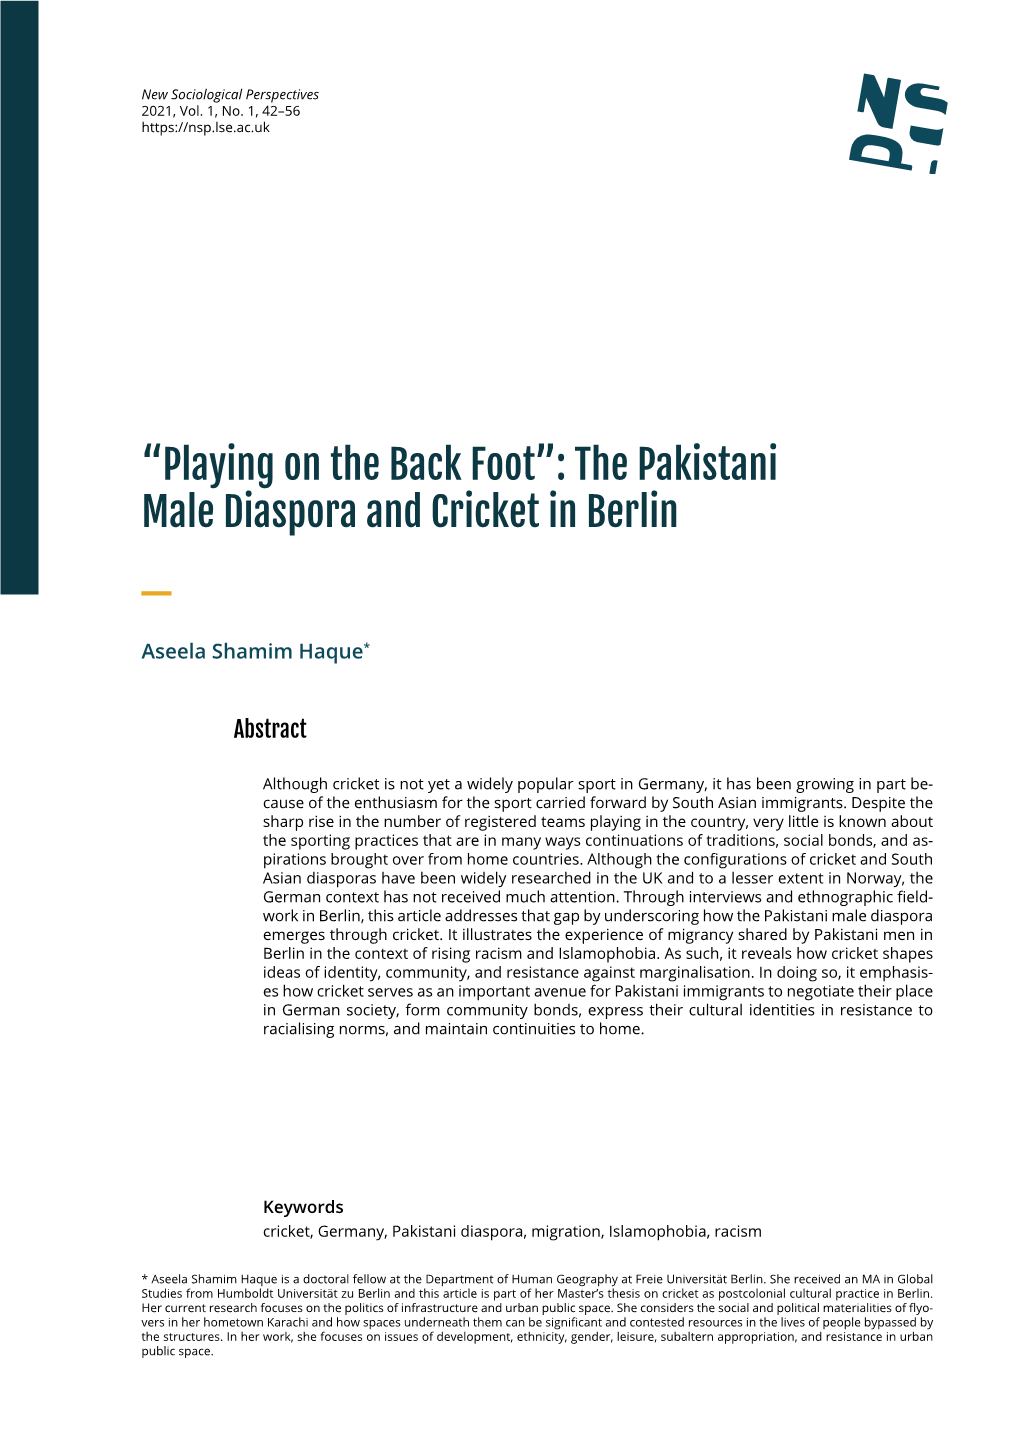 The Pakistani Male Diaspora and Cricket in Berlin